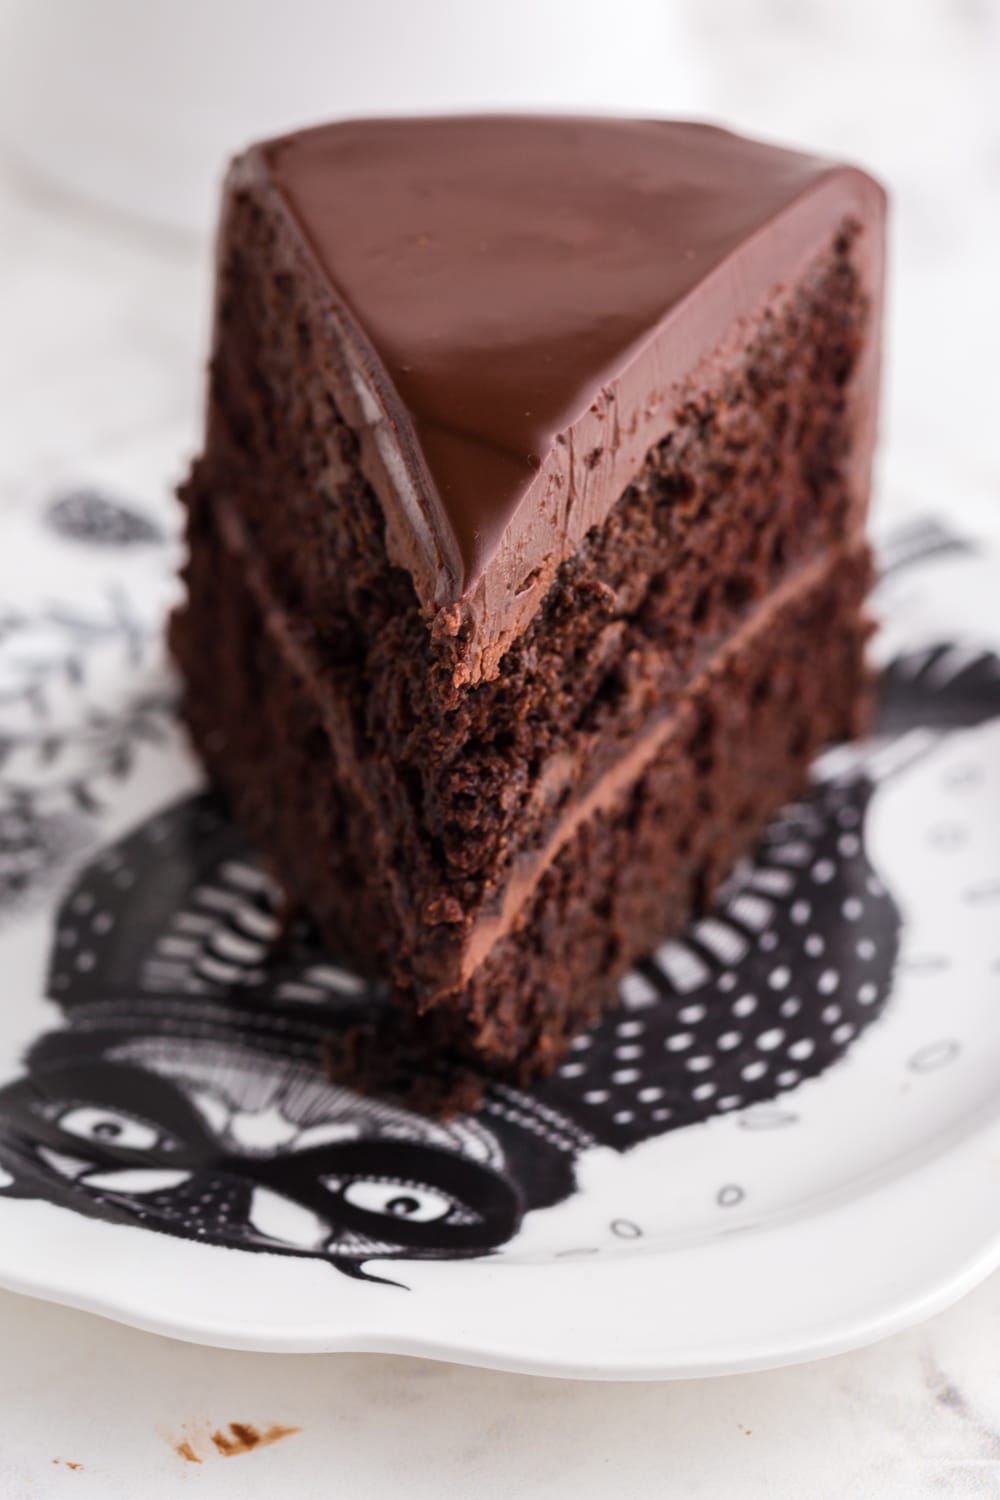 Slice of black magic cake on a dessert plate.